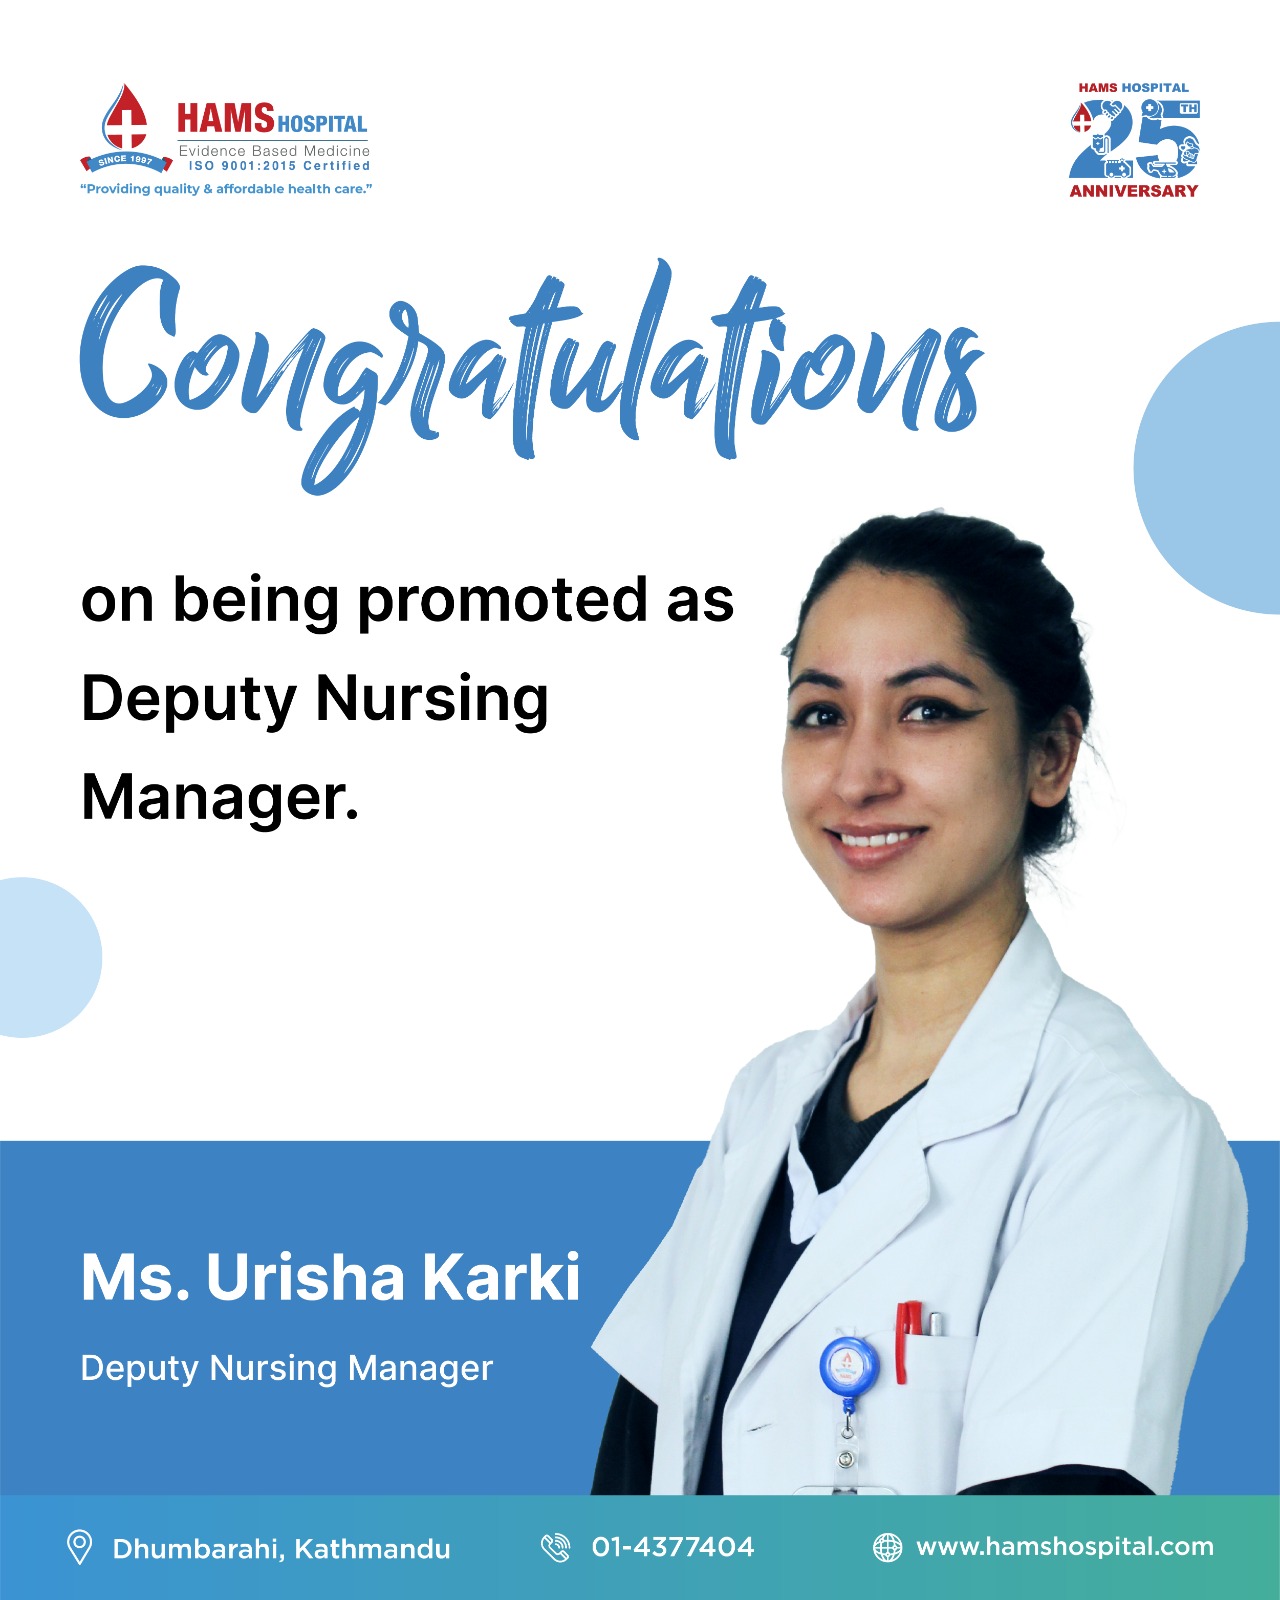 Congratulation to Ms. Urisha Karki on being promoted as Deputy Nursing Manager.